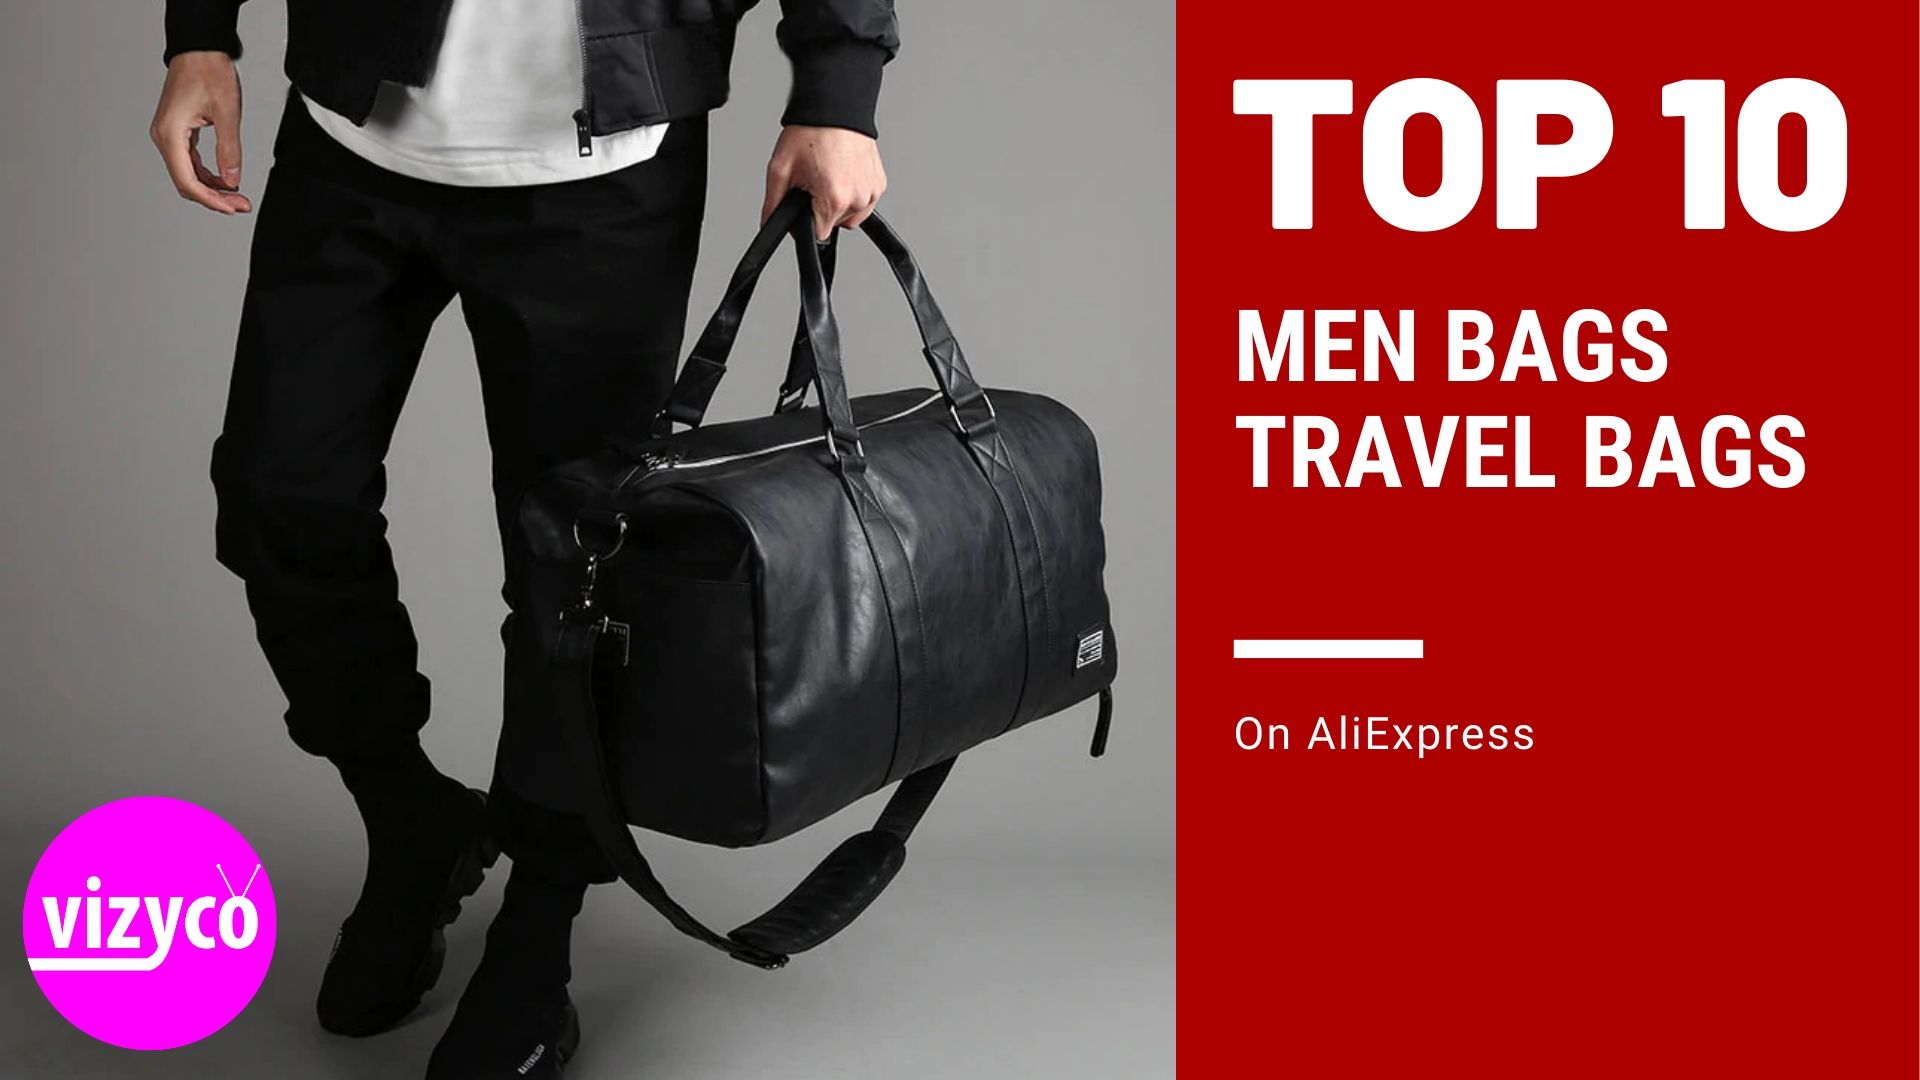 Men Bags Travel Bags Top 10! on AliExpress | vizyco